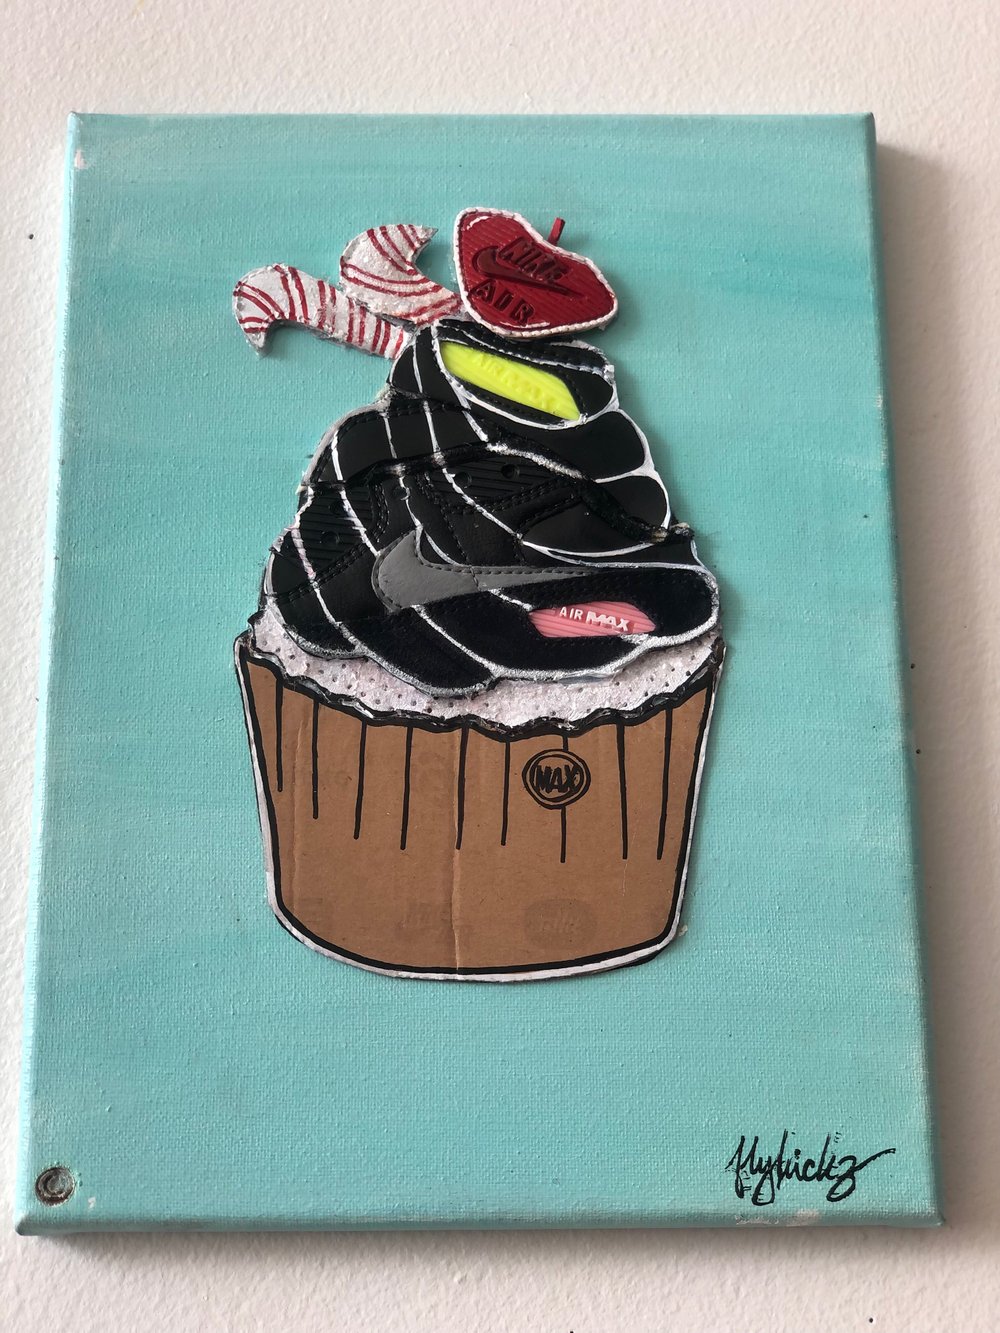 Cupcake 